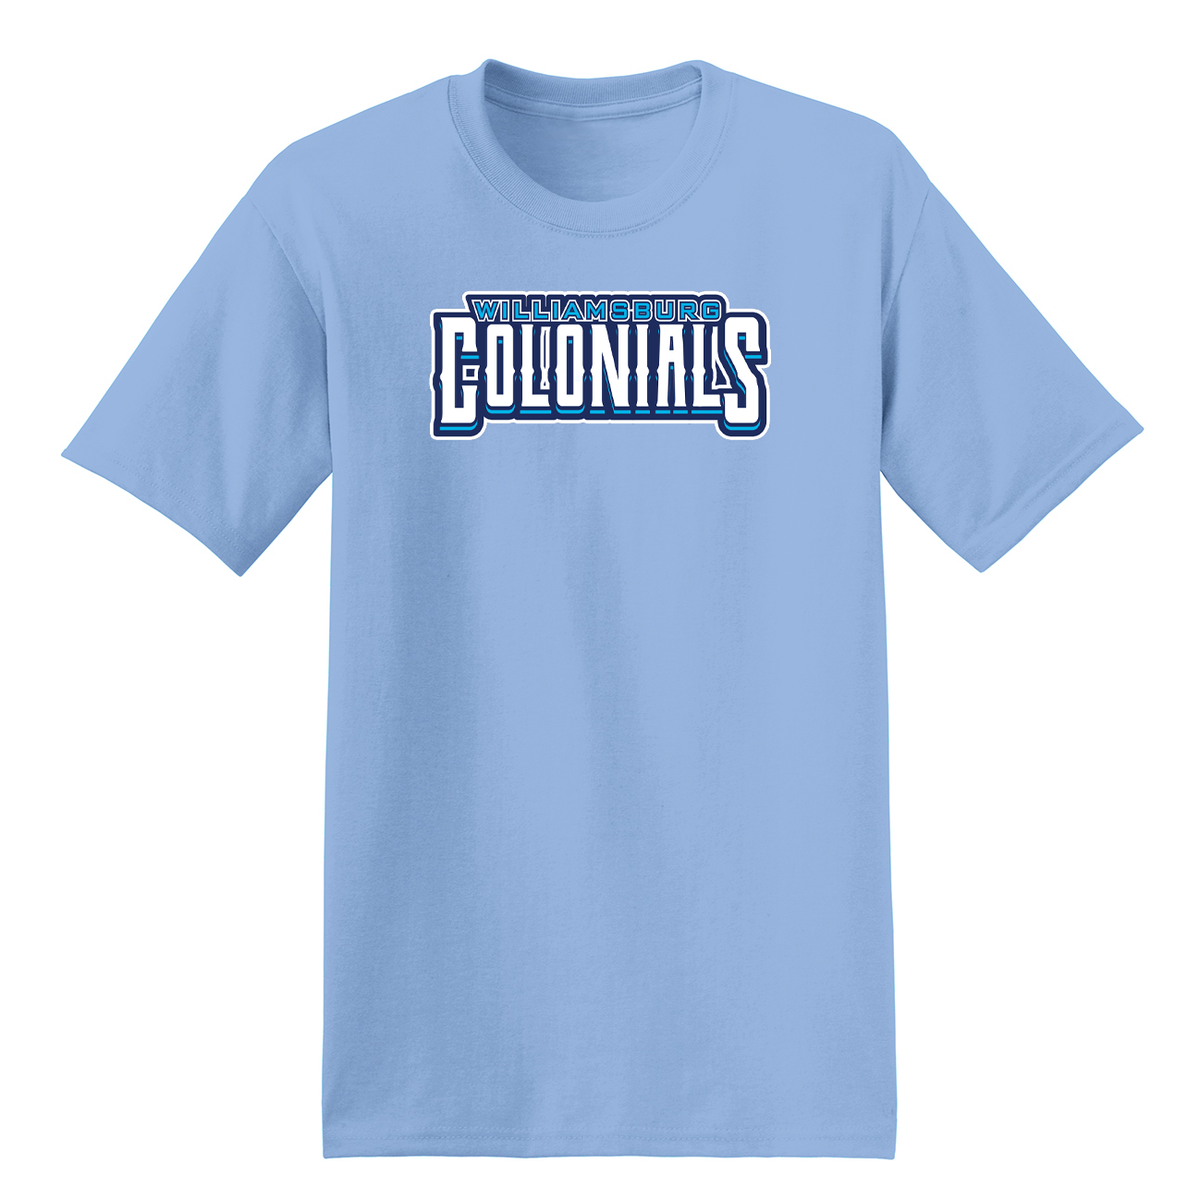 Williamsburg Colonials Football T-Shirt